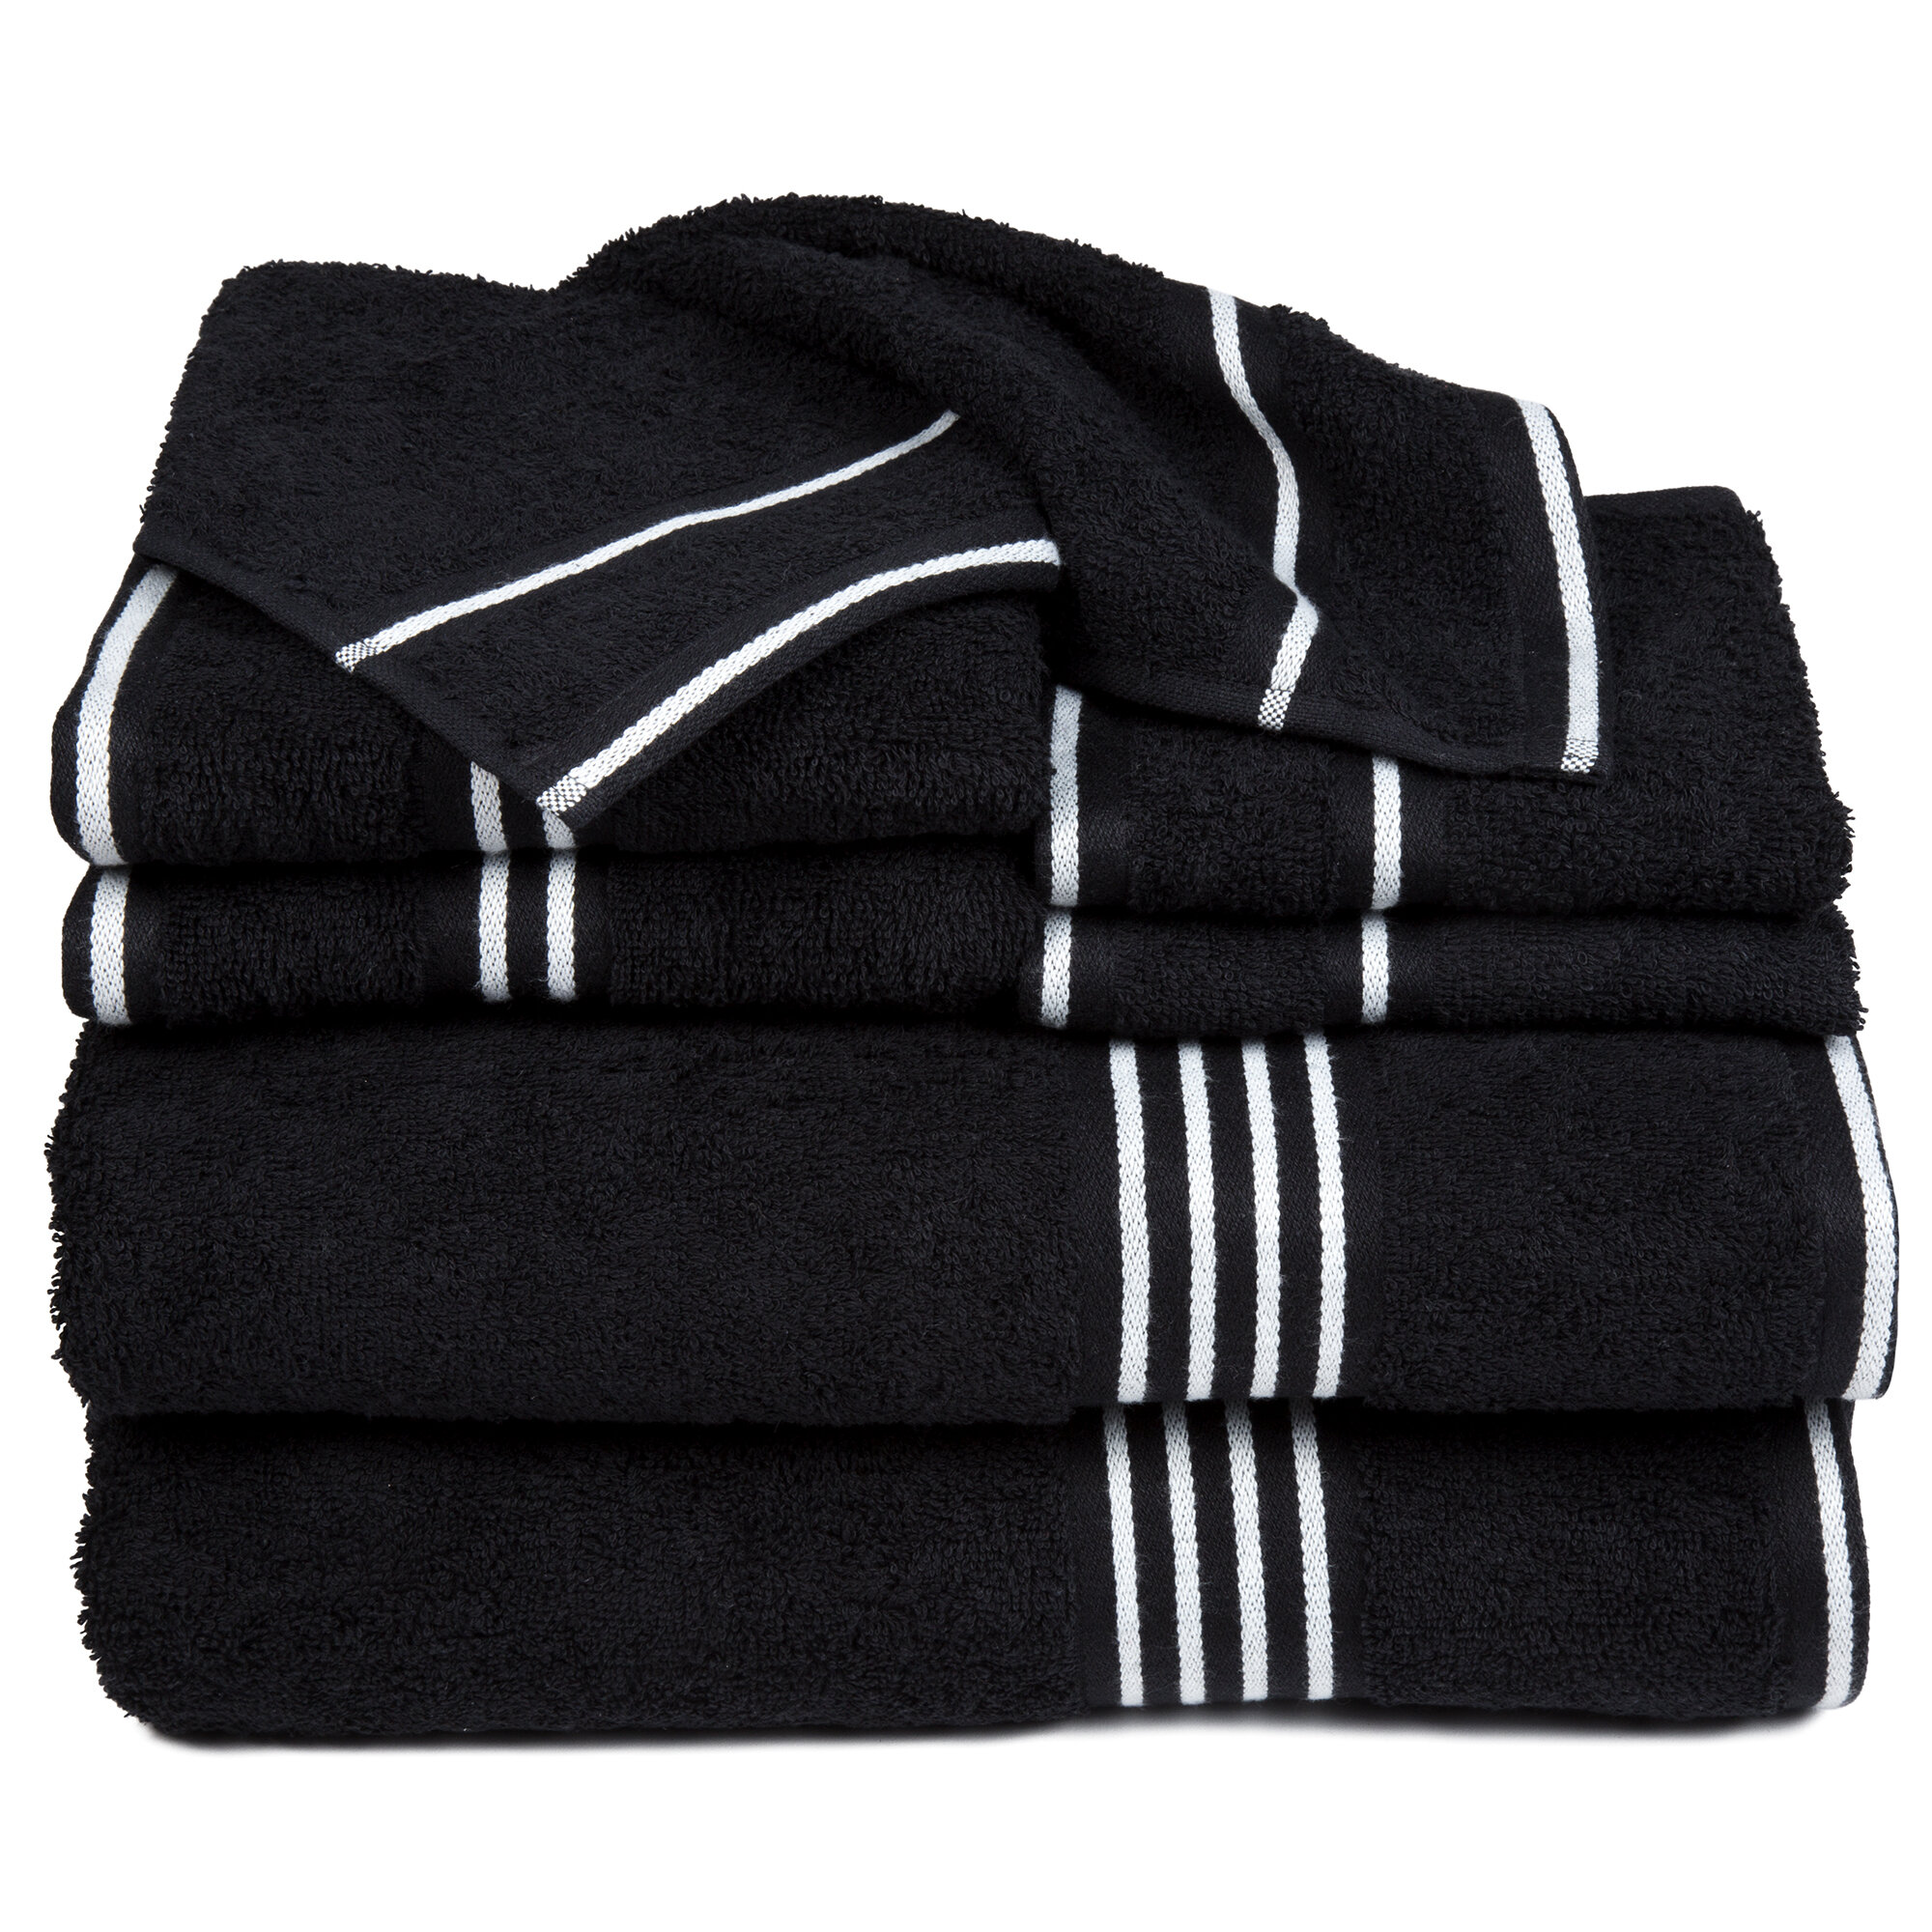  LANE LINEN Luxury Bath Towels Set - 12 Piece Set, 100%  CottonBathroom Towels, Zero Twist, Shower Towels, Extra Absorbent Bath Towel,  Super Soft, 4 Bath Towels, 4 Hand Towels, 4 Wash